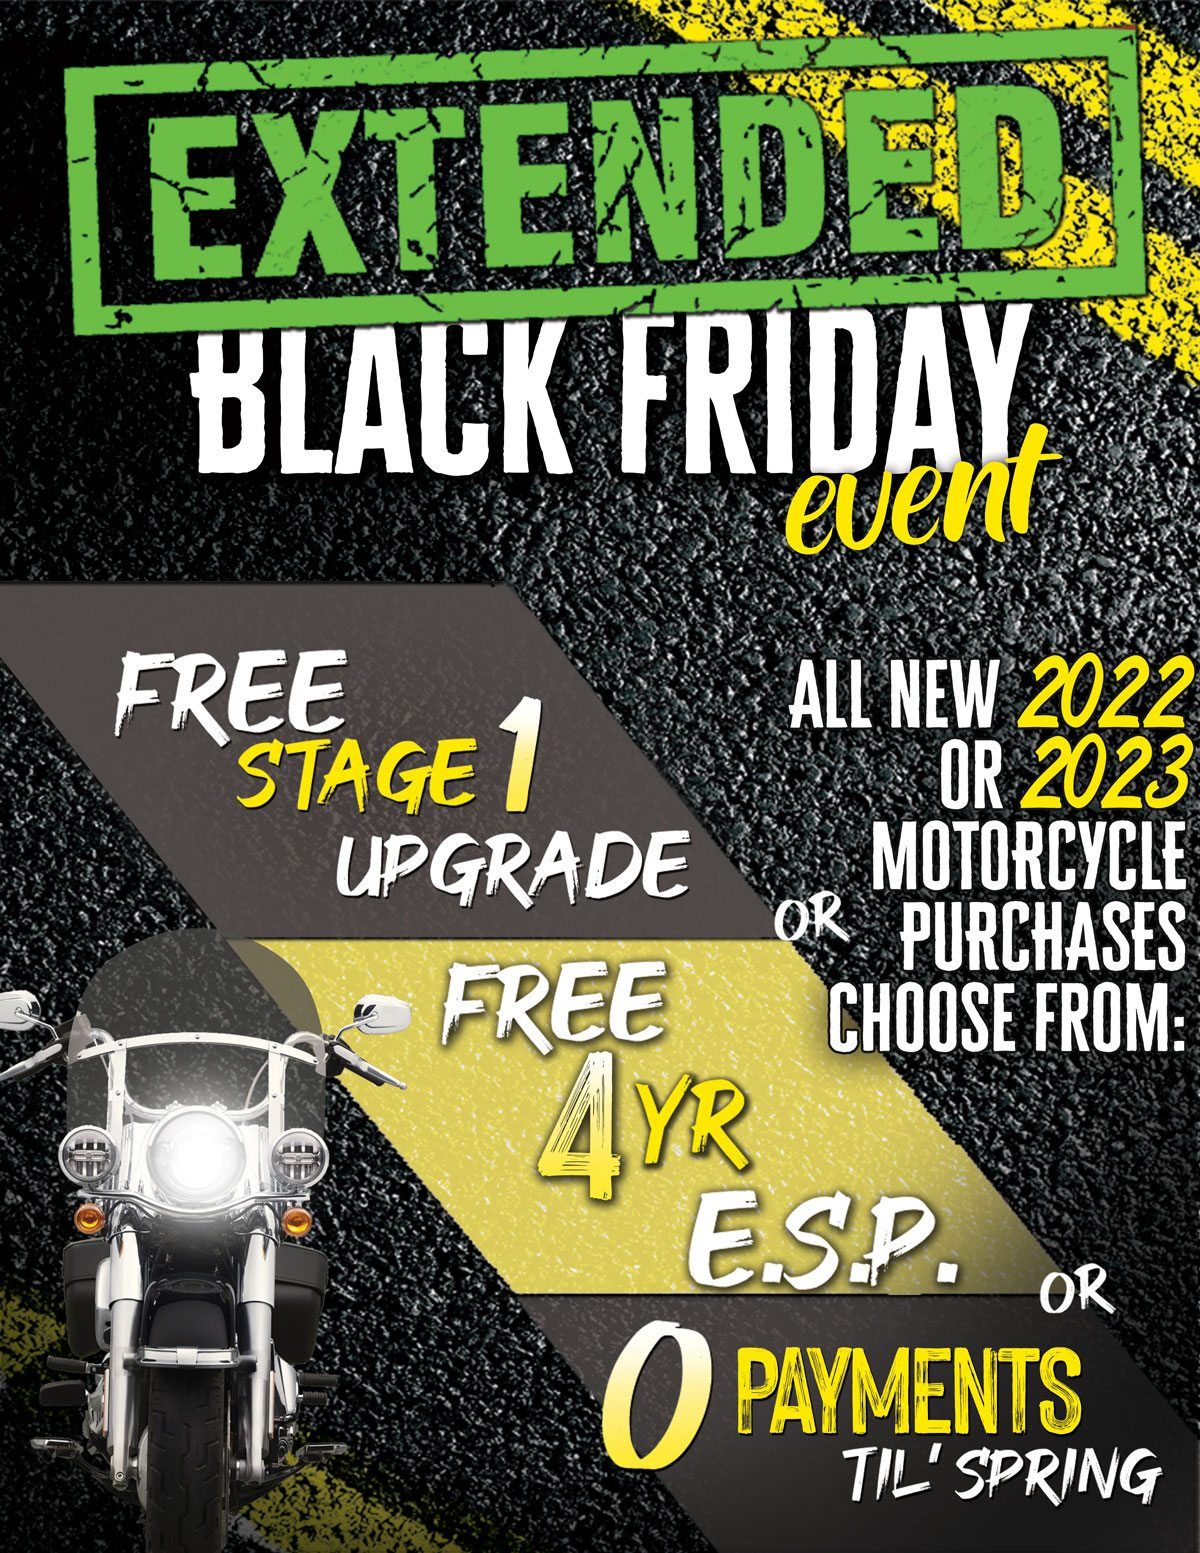 Black Friday Event 2022 at Faribault Harley-Davidson